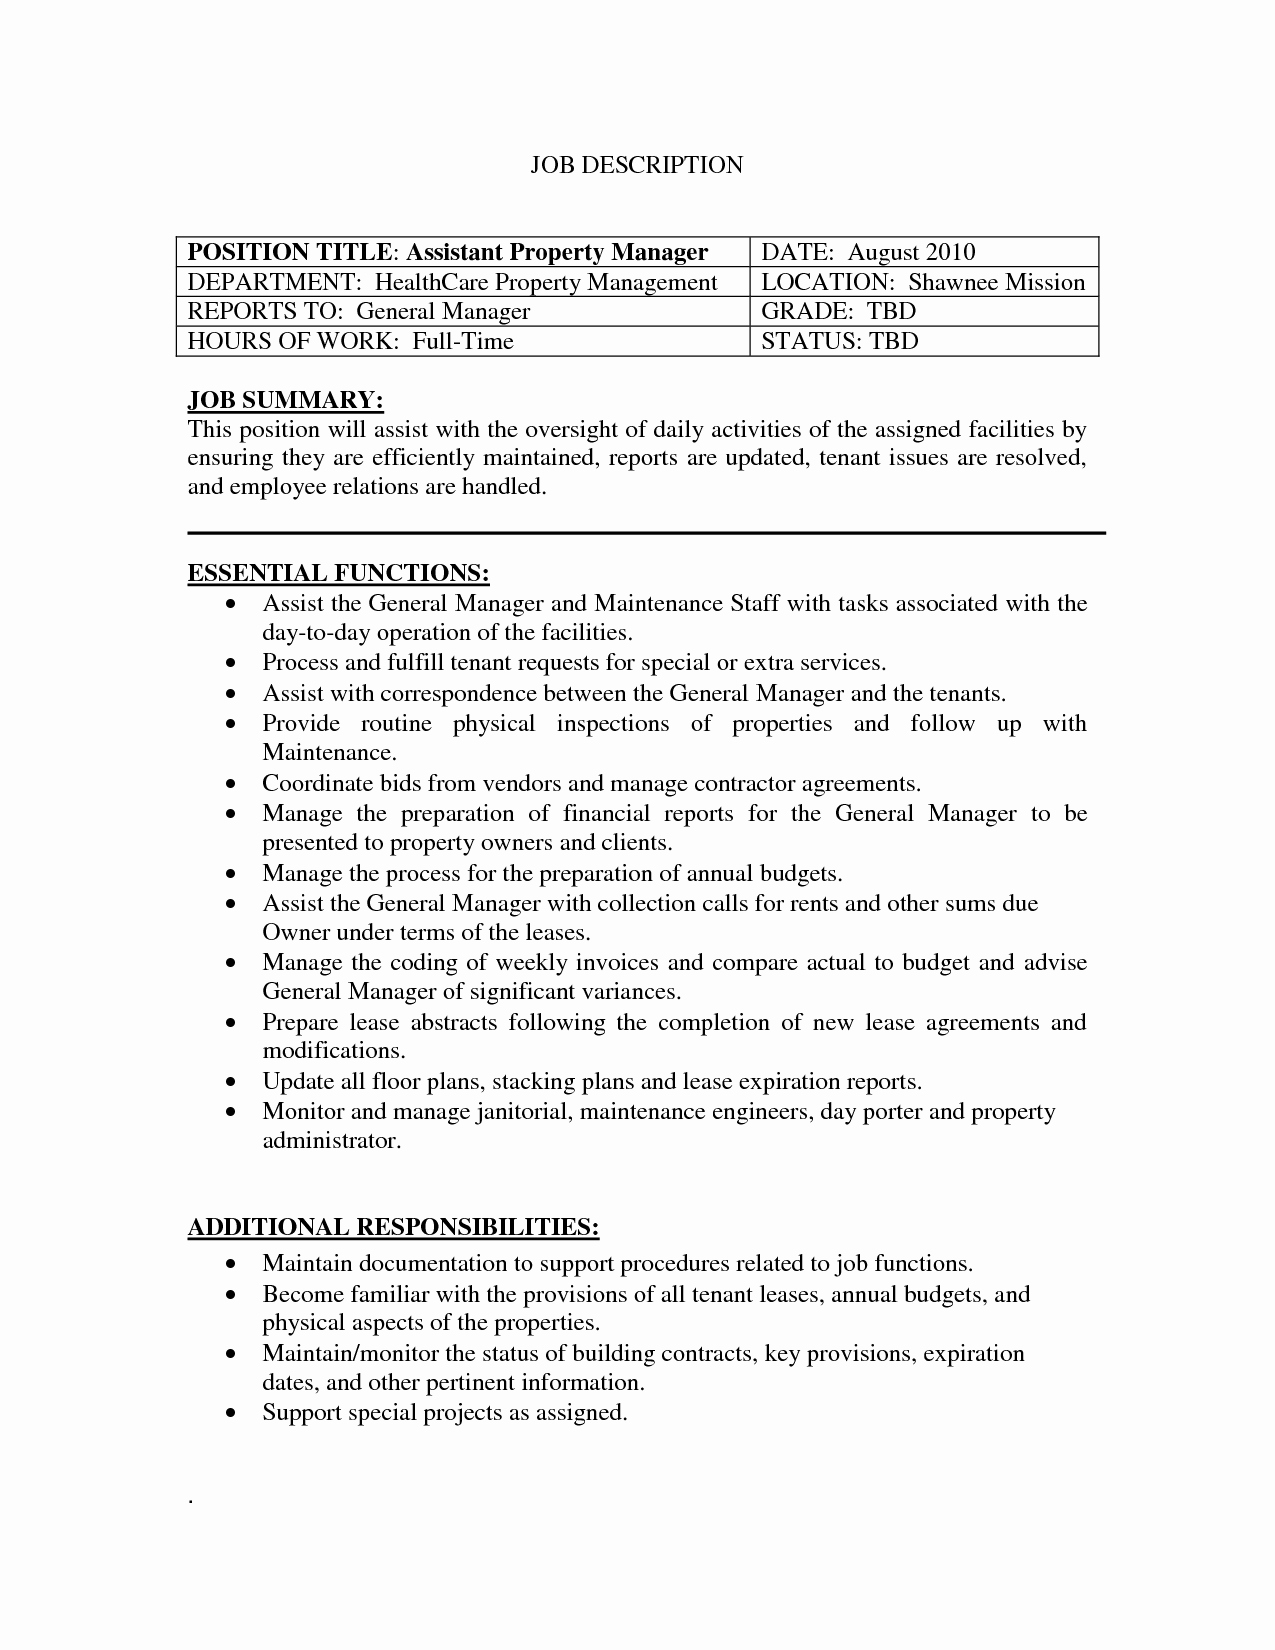 Assistant Property Manager Resume Unique Property Management Job Description for Resume